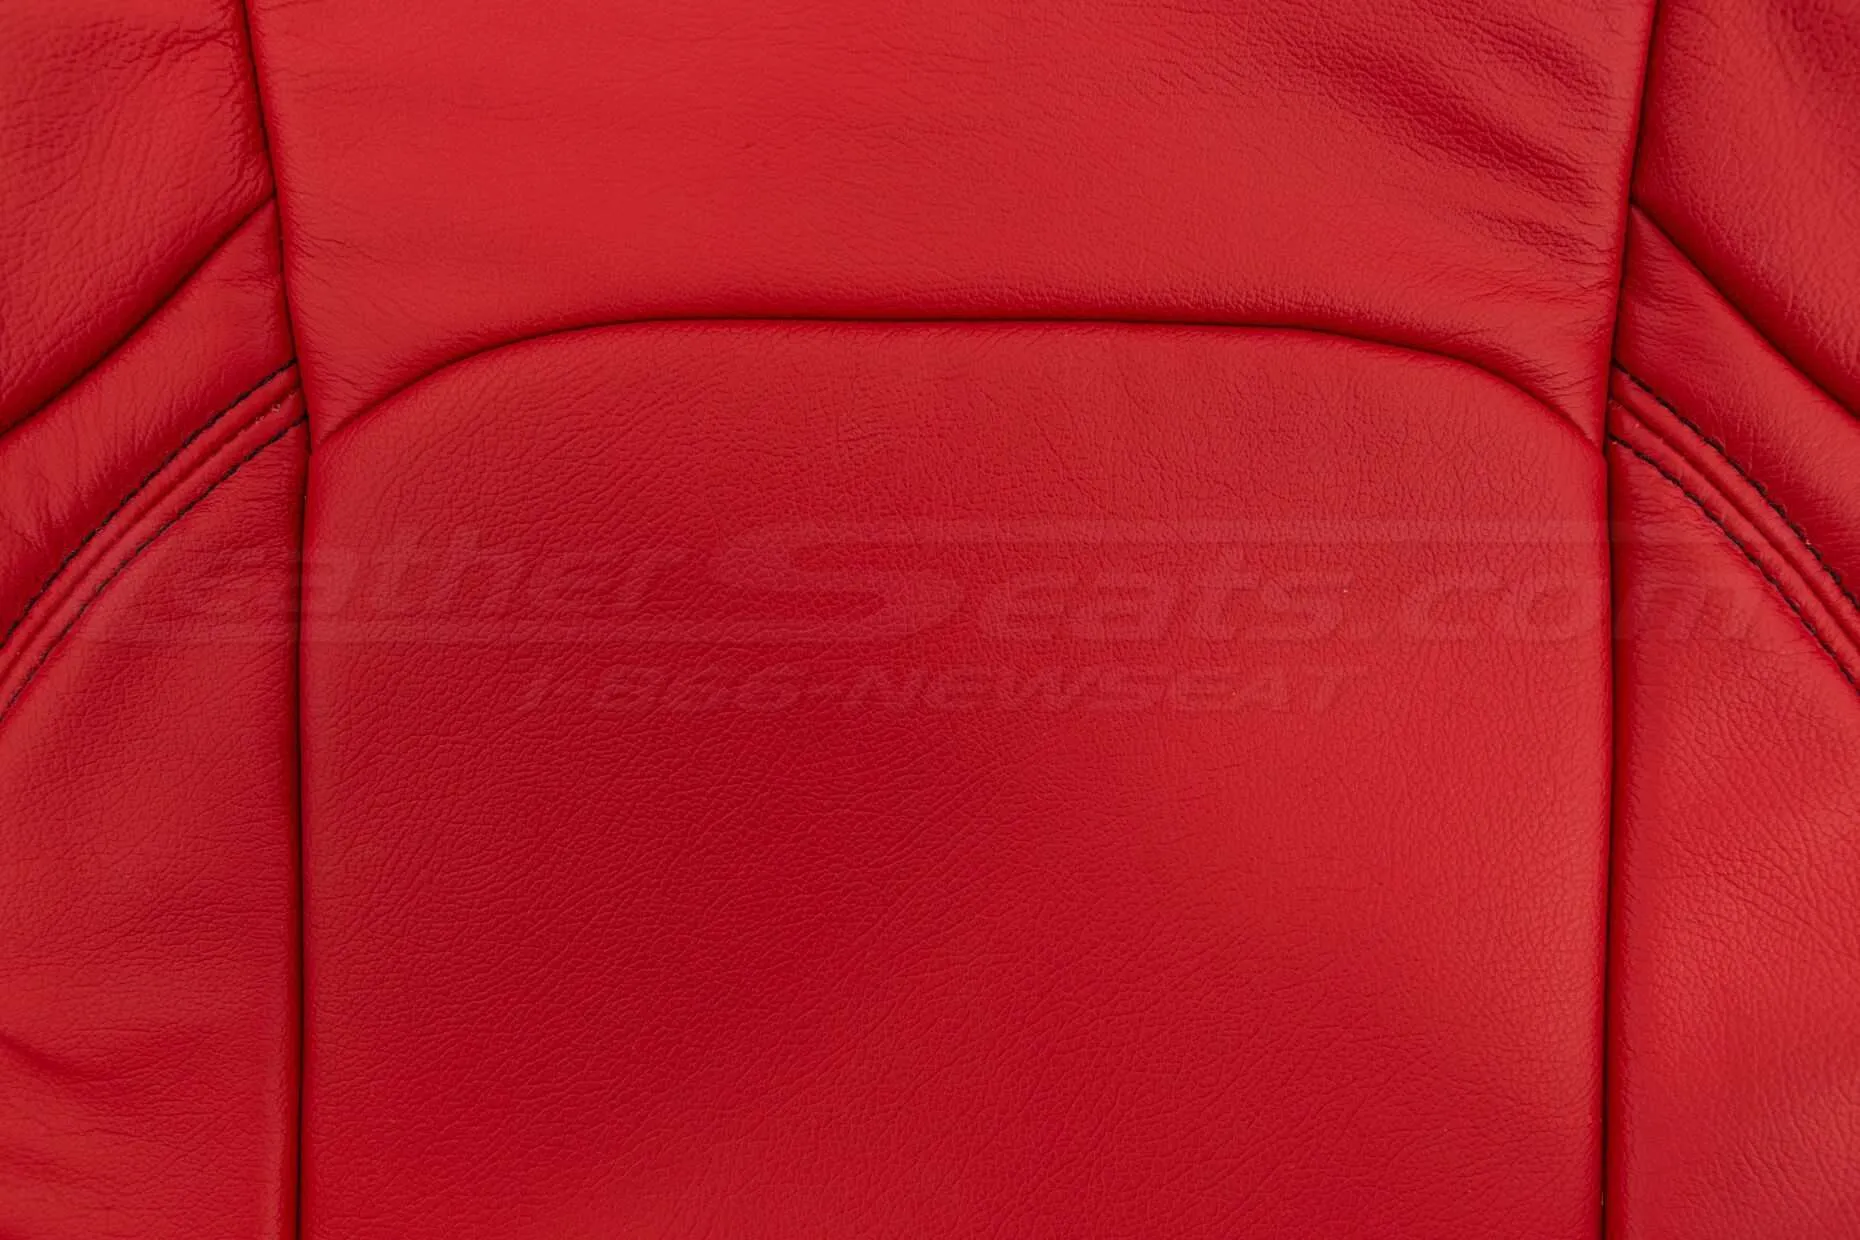 Bright Red Backrest insert